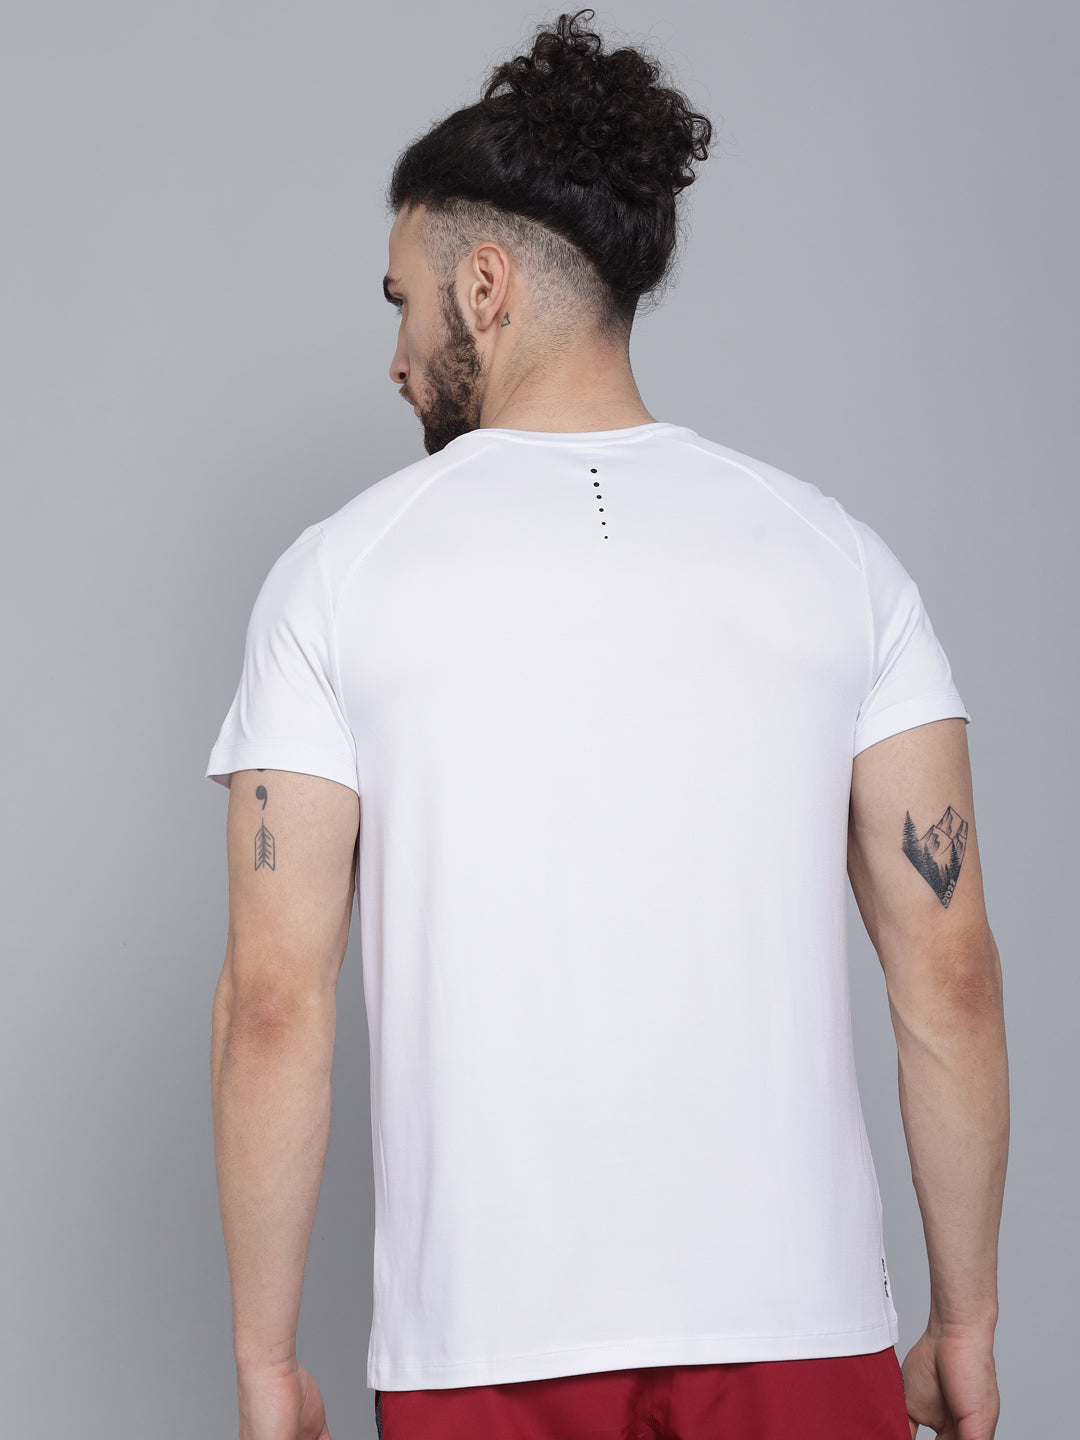 White Yoga CREW-Neck Half sleeves T-Shirt